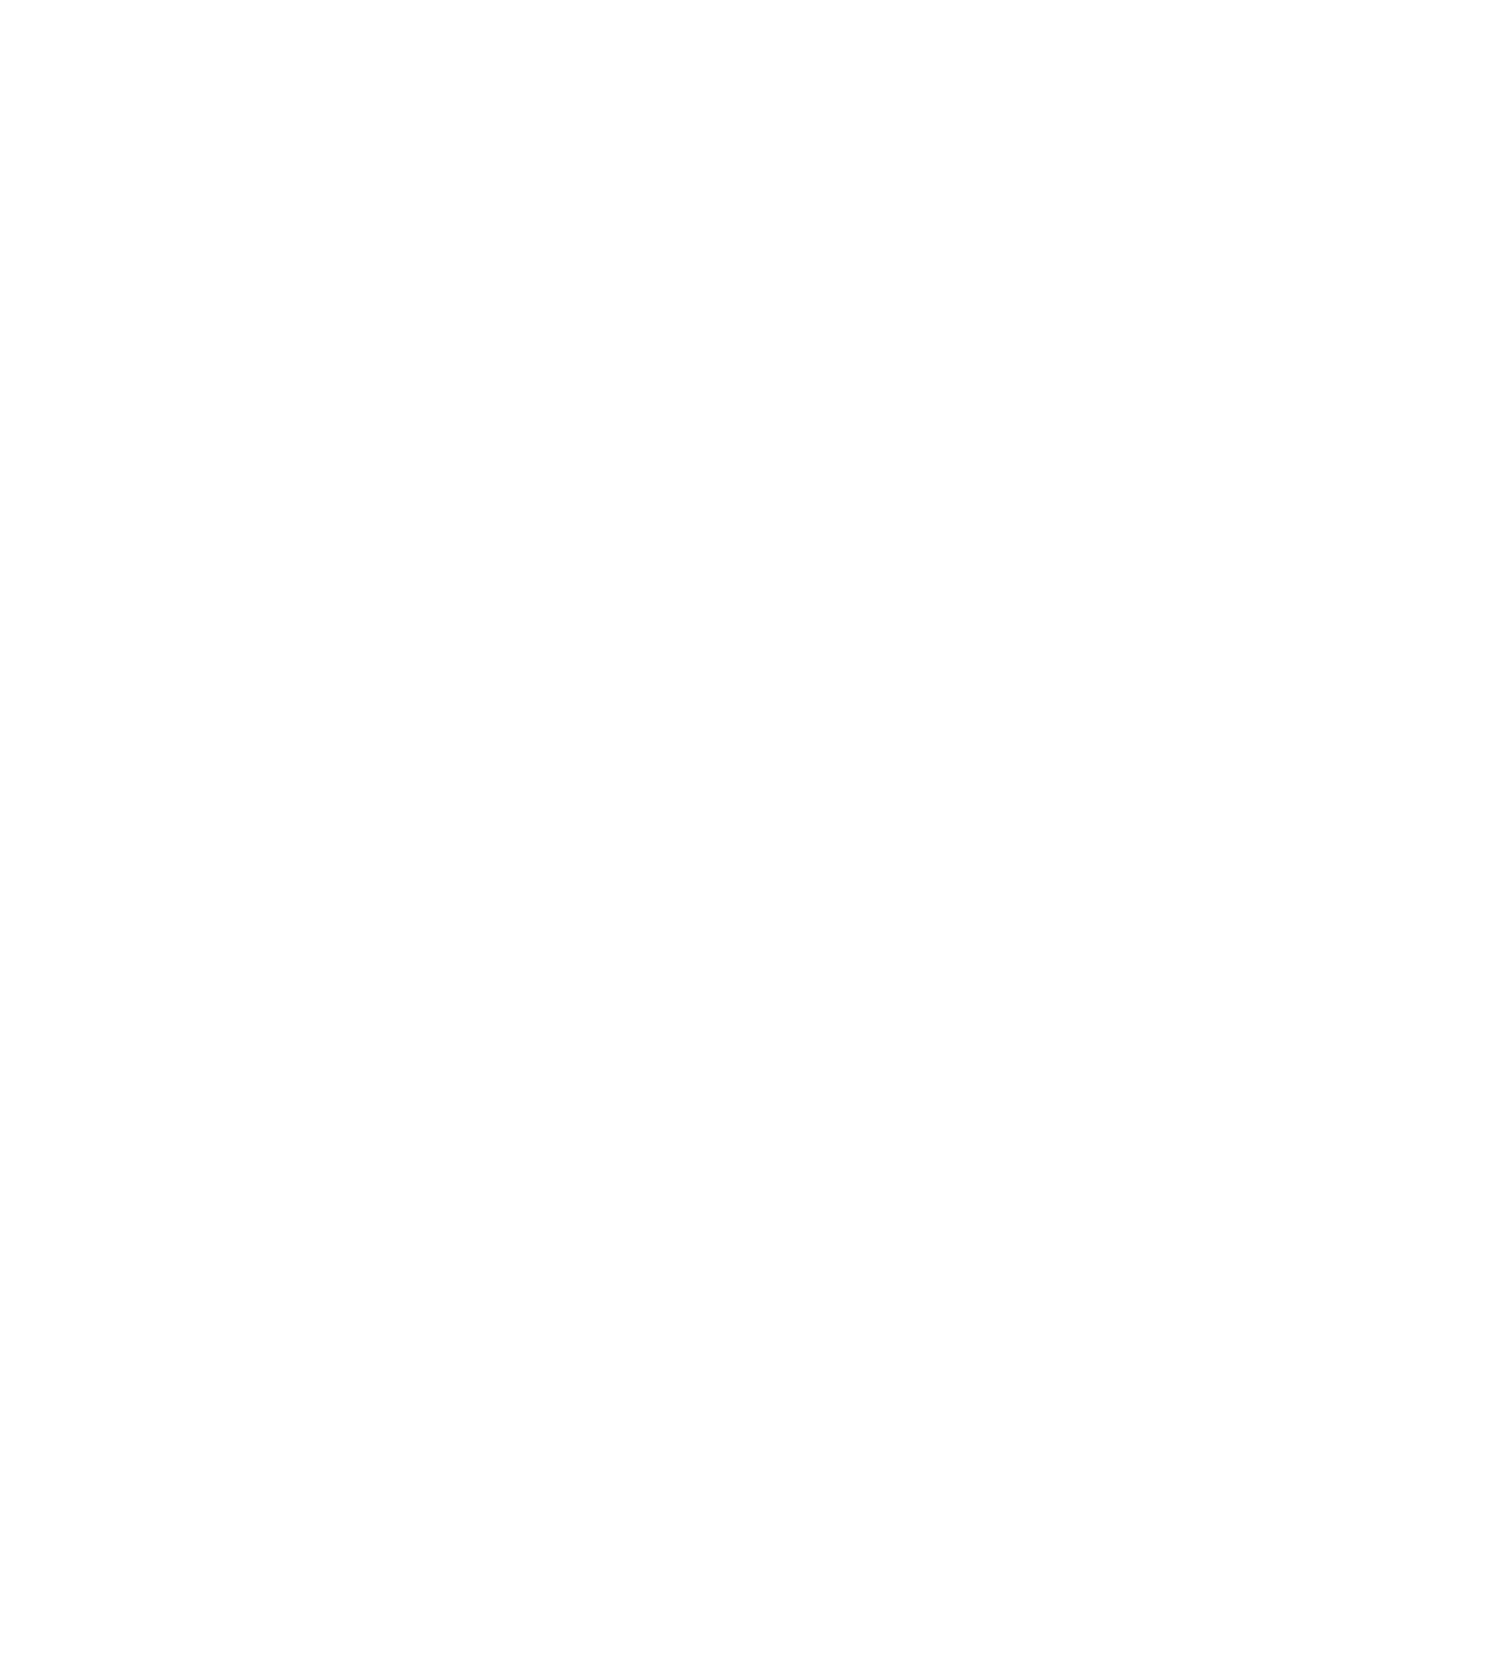 Guide Pro